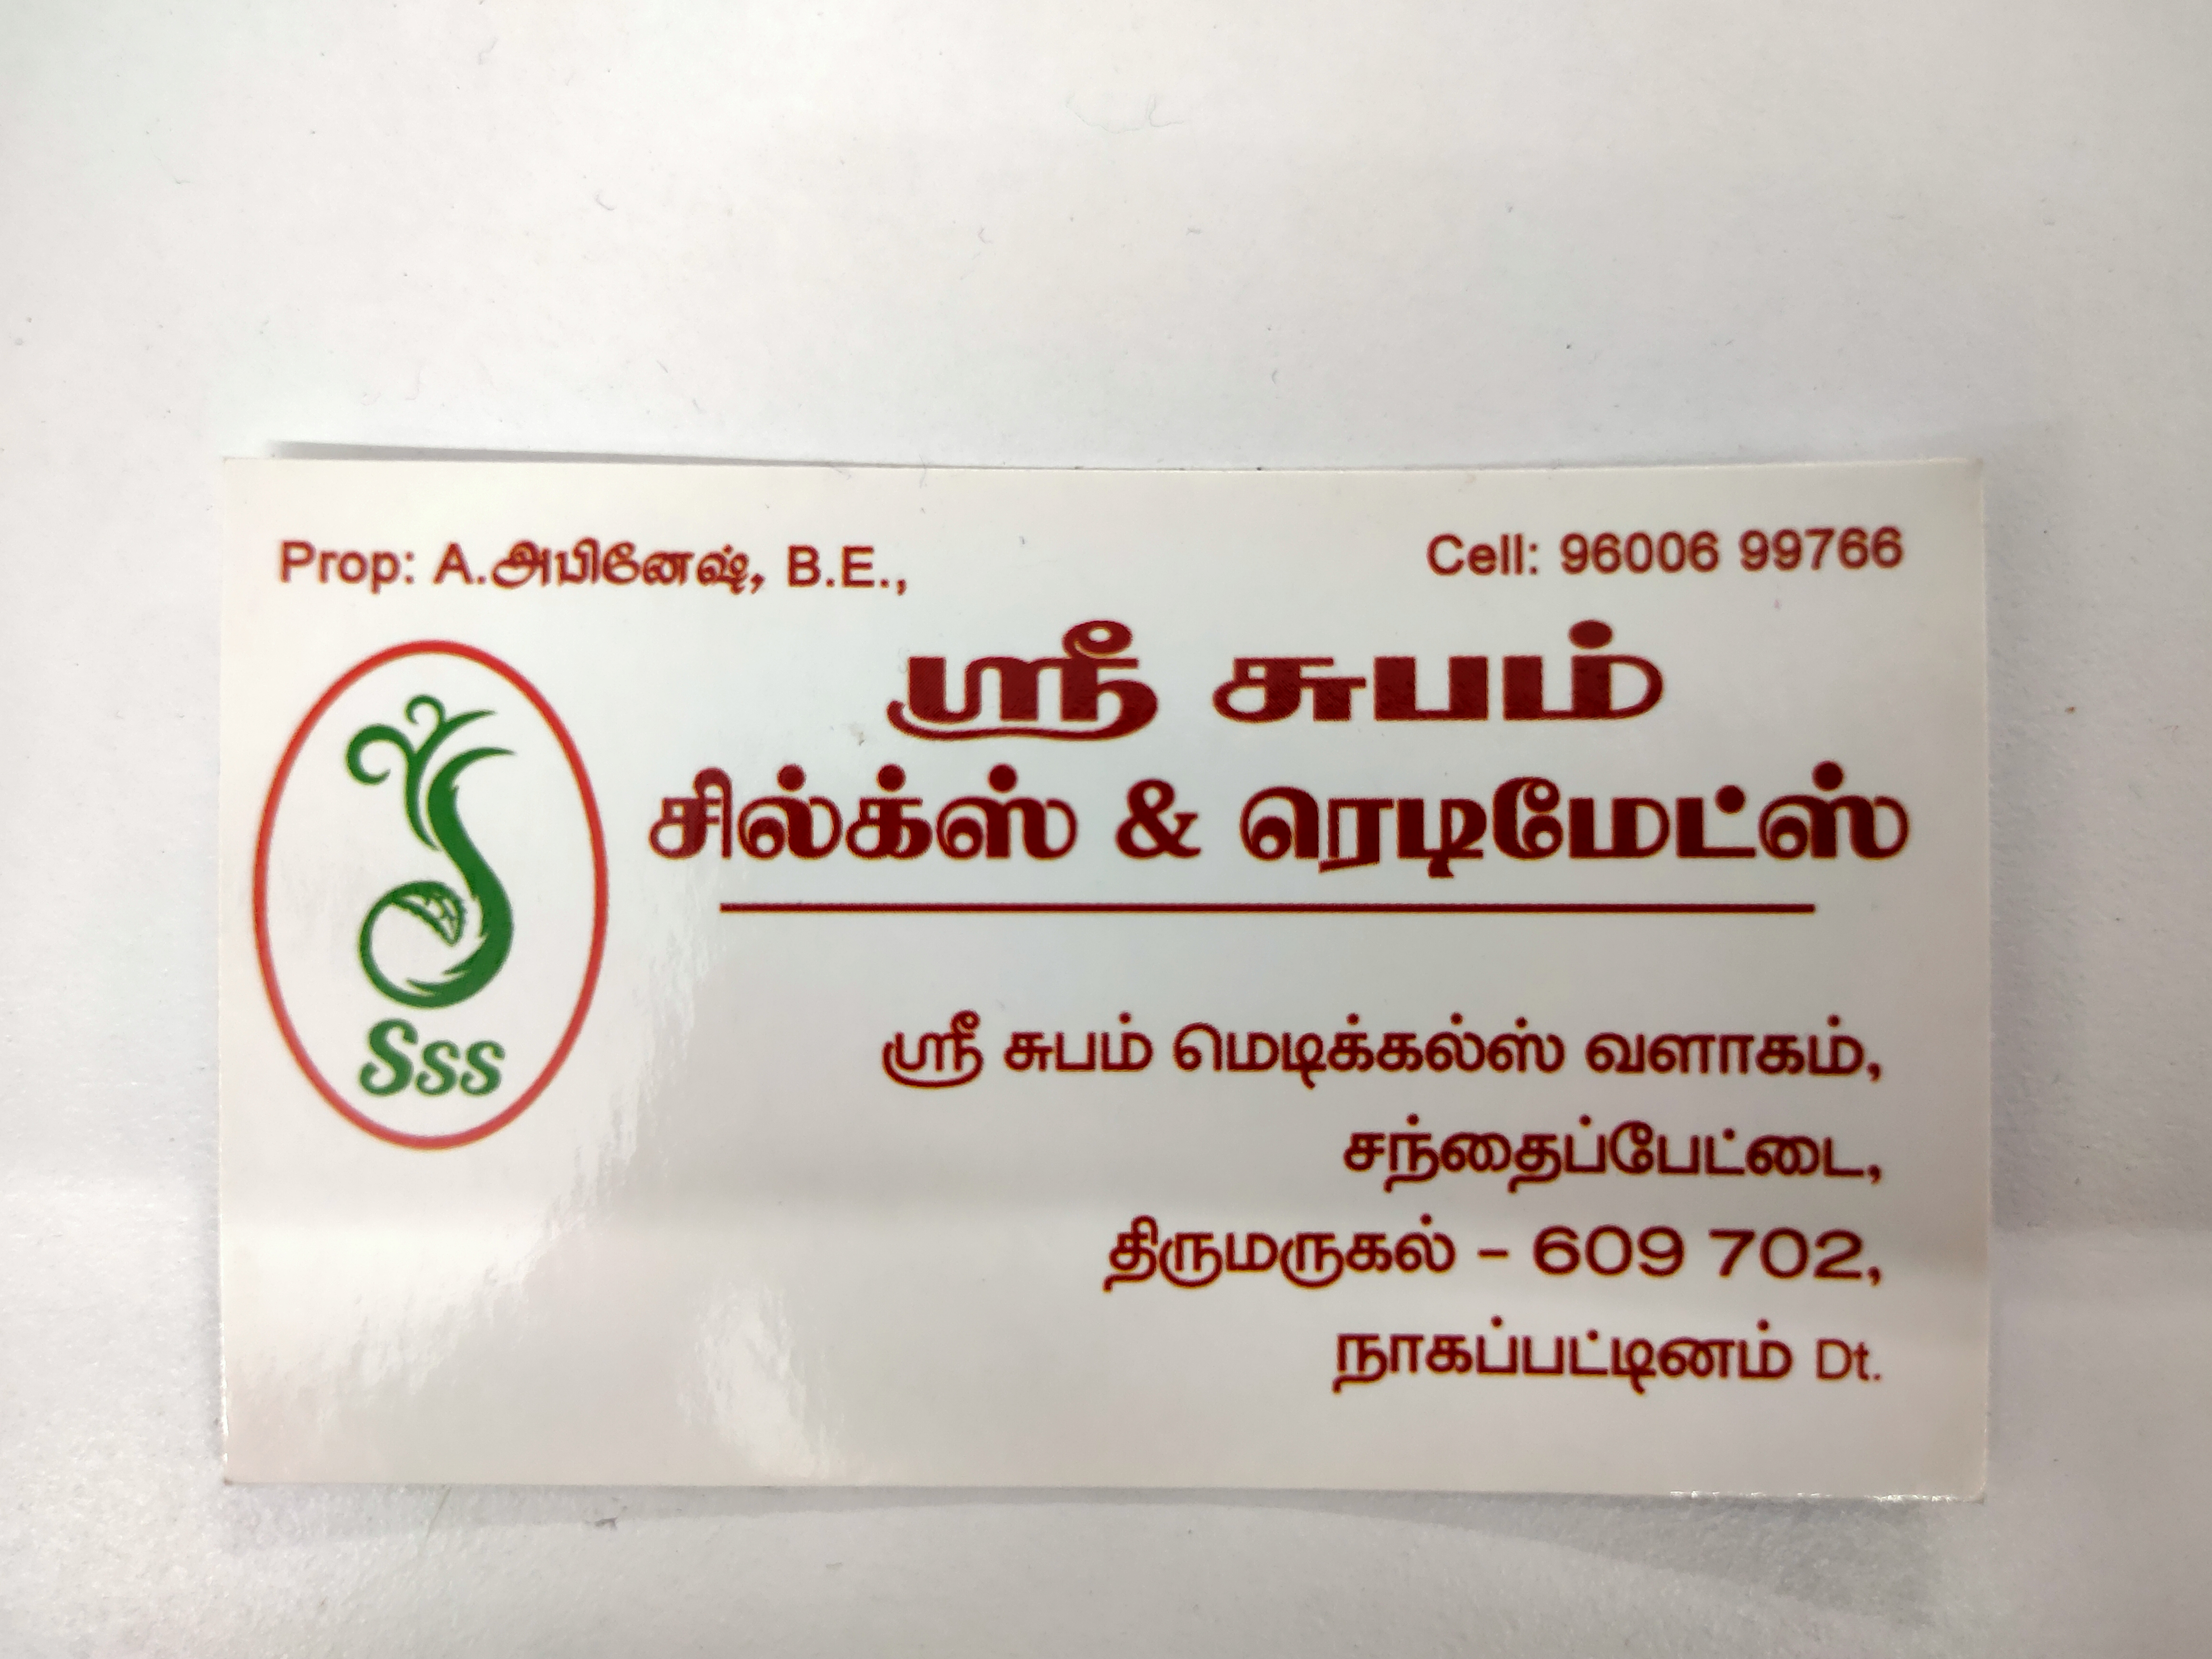 Business logo of Sri Subam silks and readymade